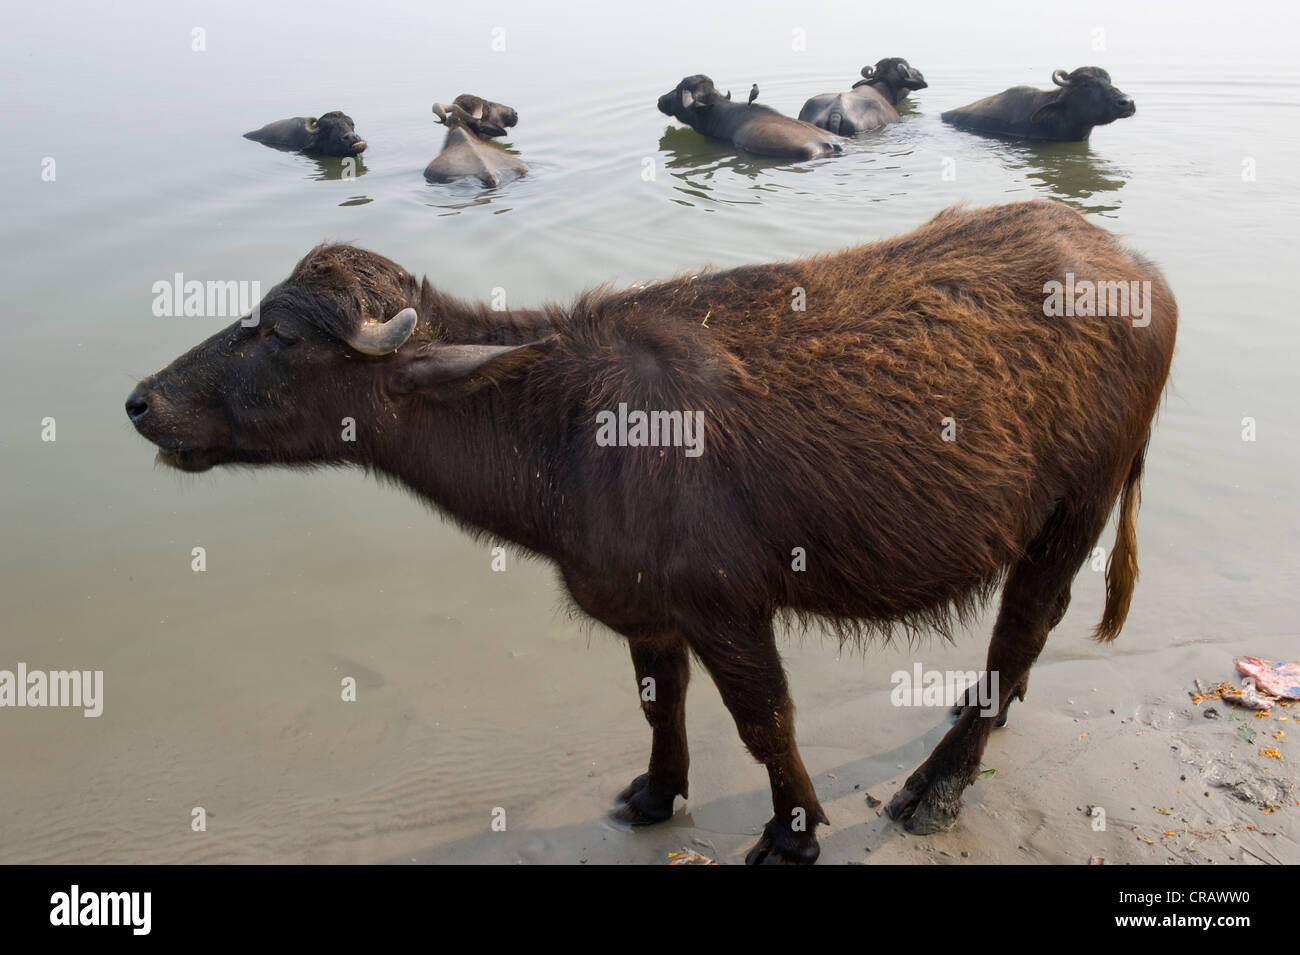 Water buffalo (Bubalus arnee), Ganges river, Varanasi, Uttar Pradesh, India, Asia Stock Photo